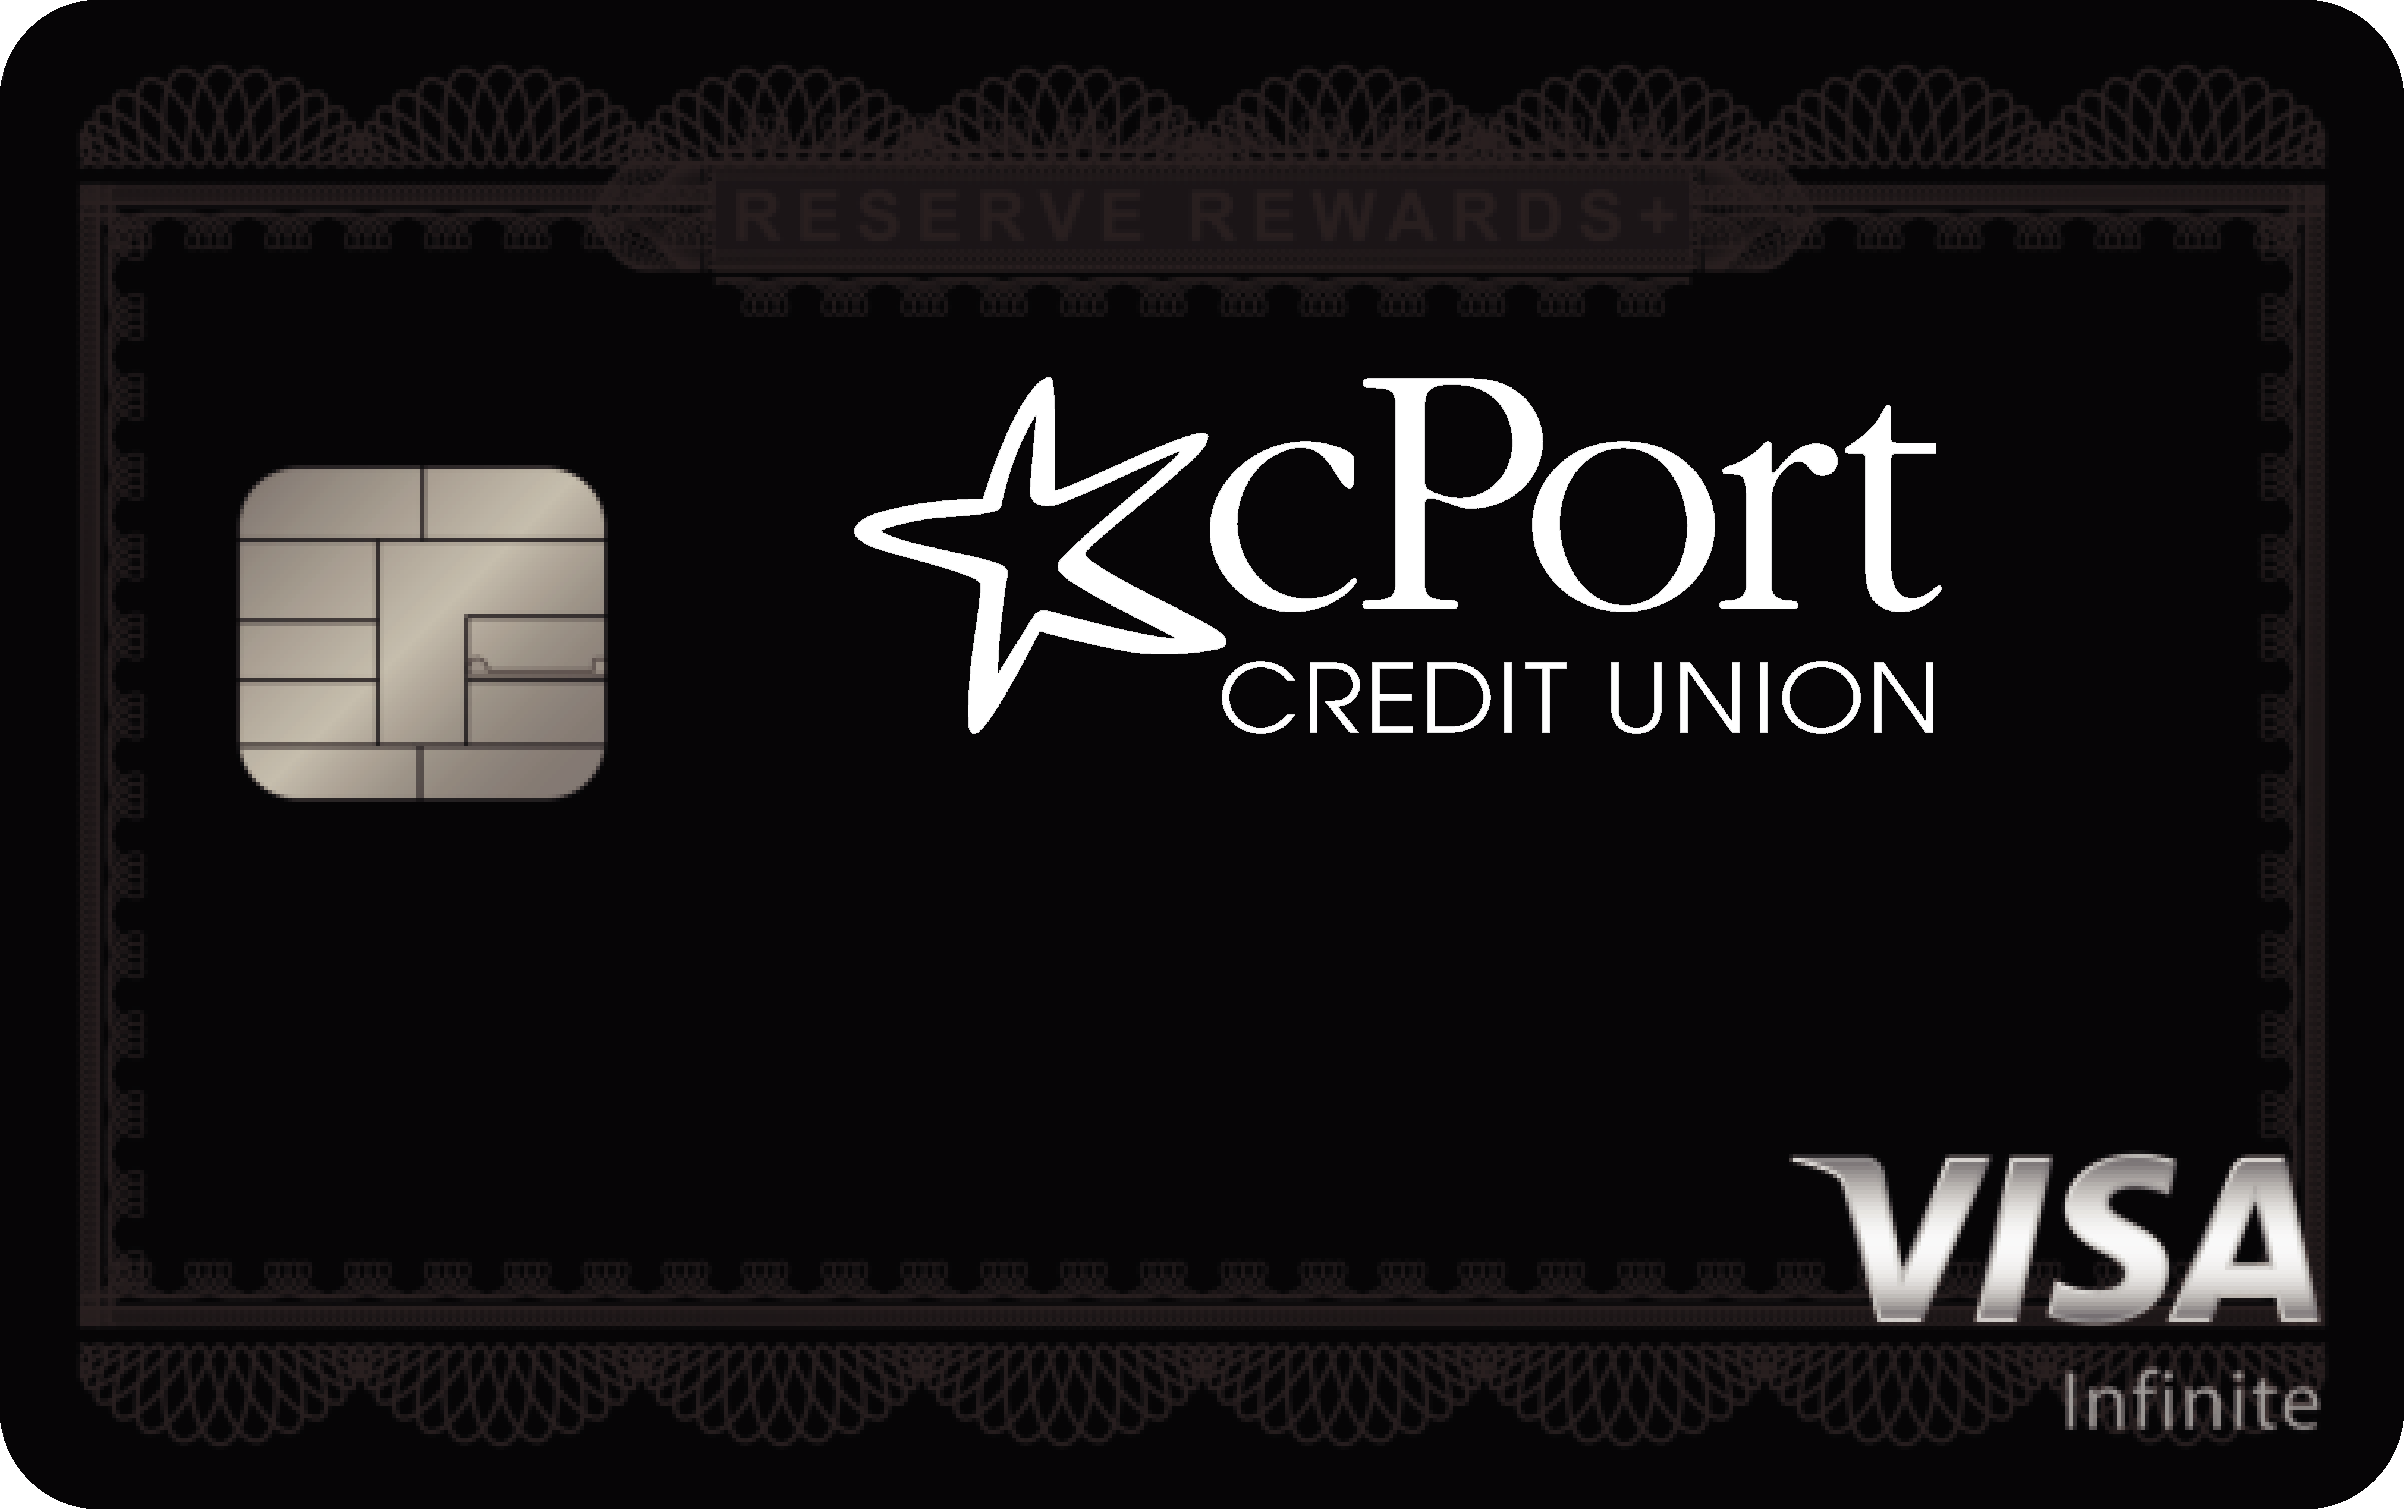 cPort Credit Union